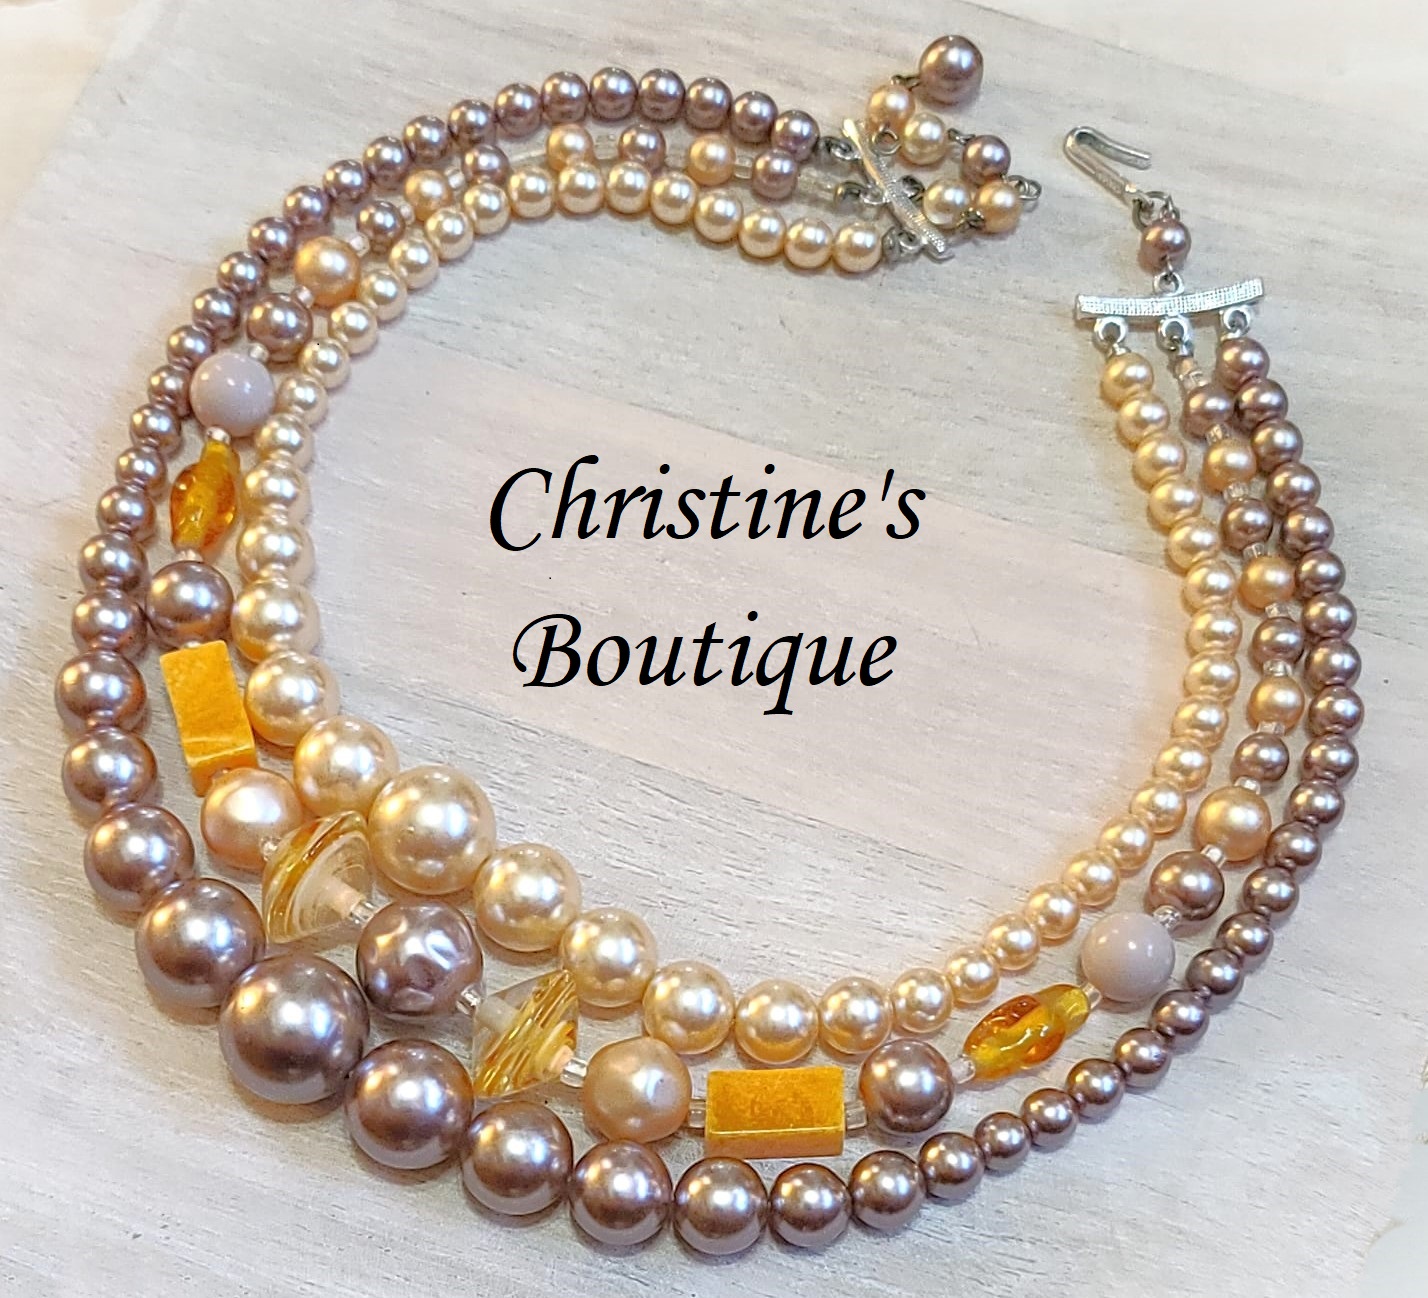 Gray, beige and orange hues vintage 3 strand necklace